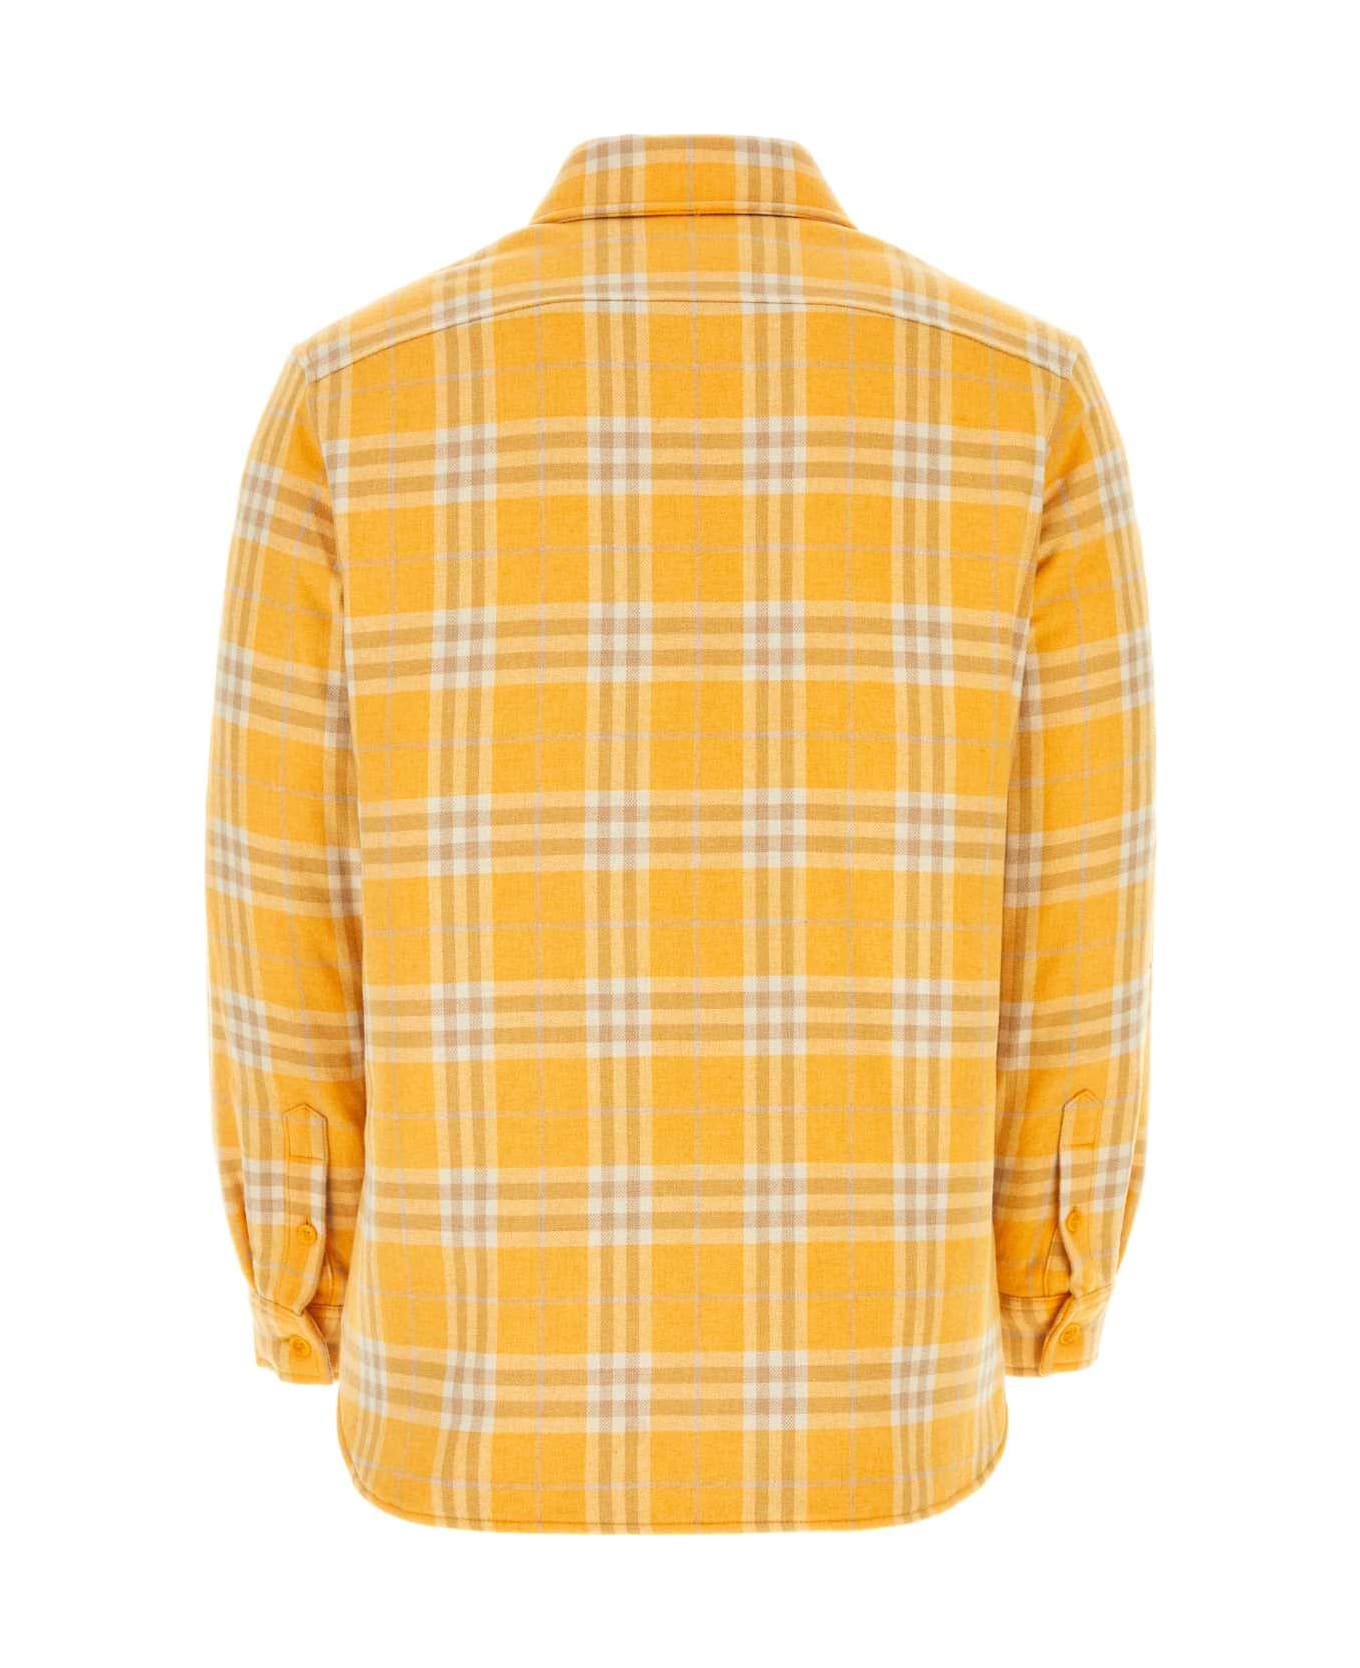 Burberry Embroidered Flannel Oversize Shirt - MARIGOLDIPCHECK